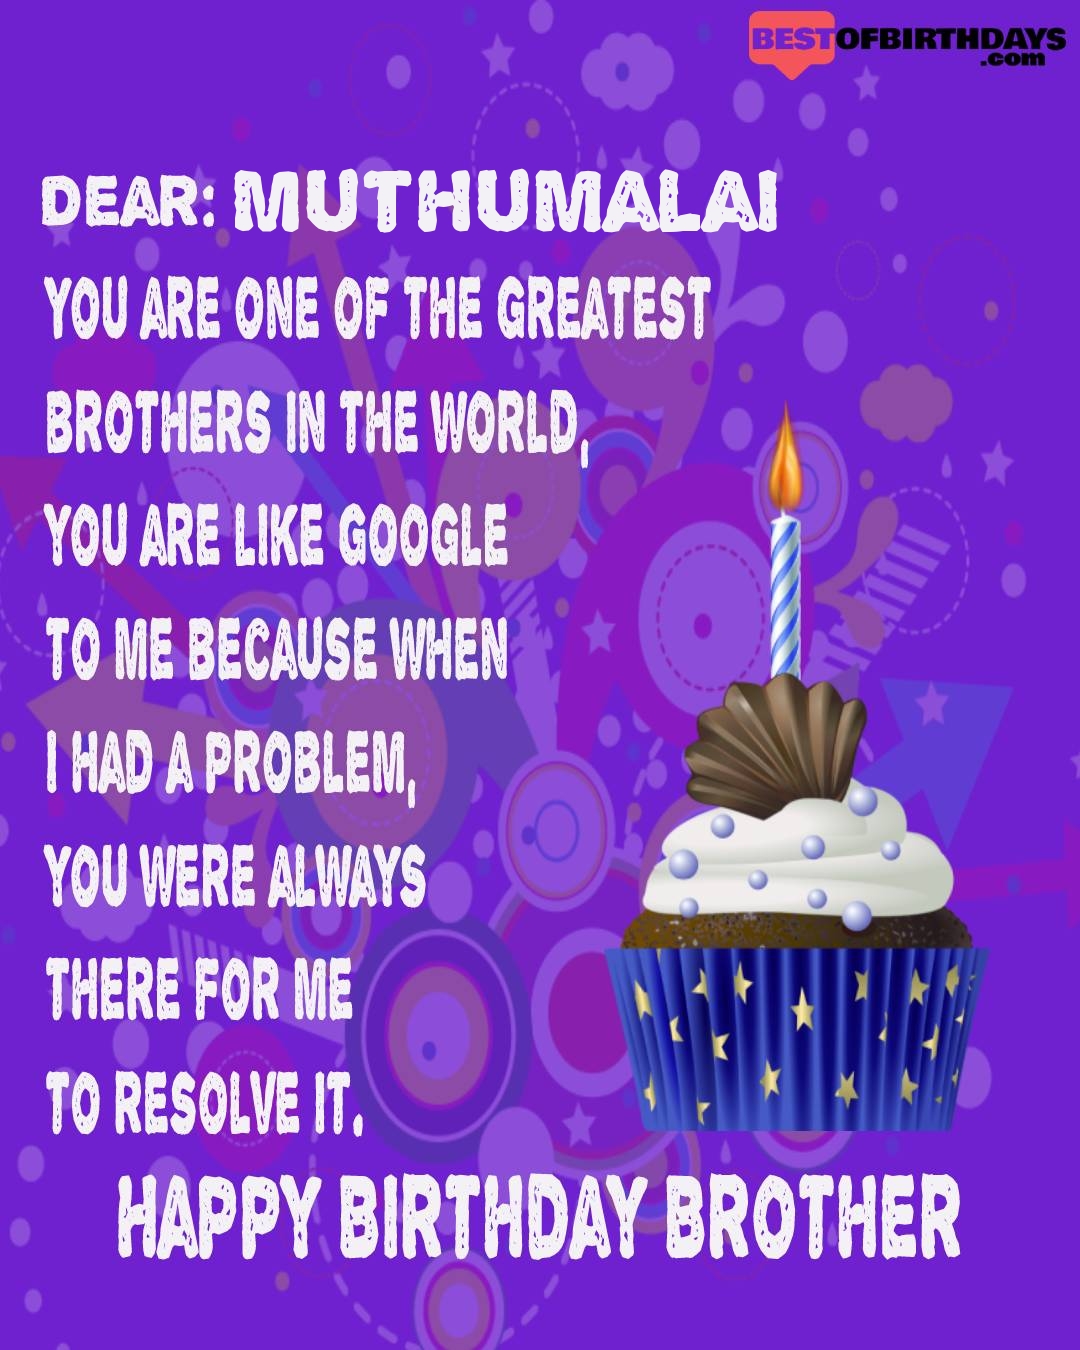 Happy birthday muthumalai bhai brother bro